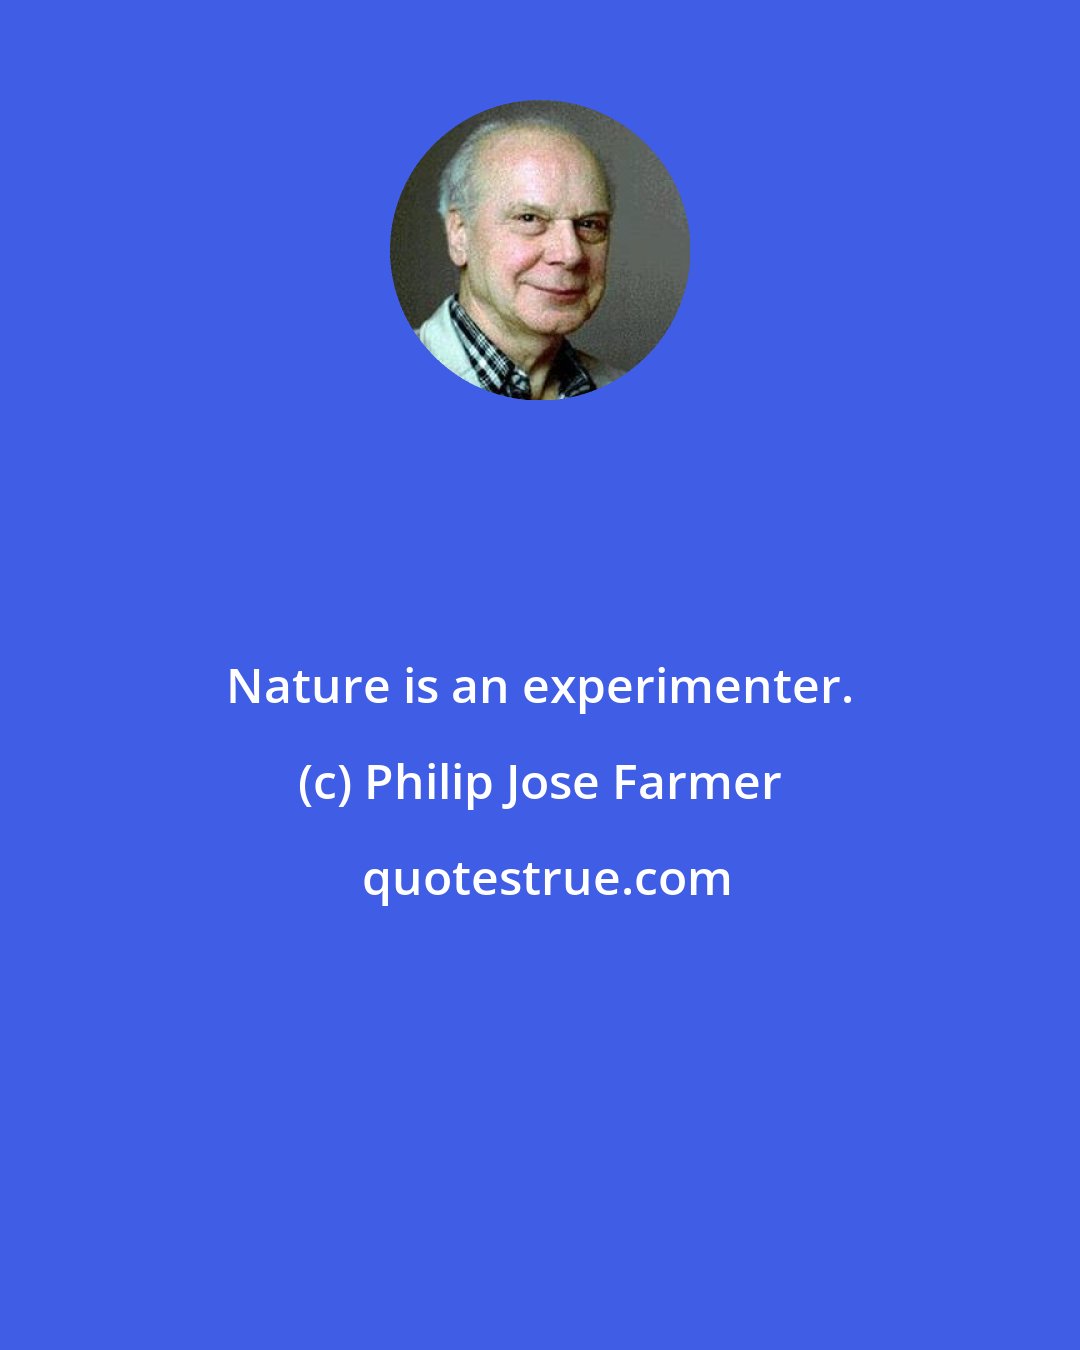 Philip Jose Farmer: Nature is an experimenter.